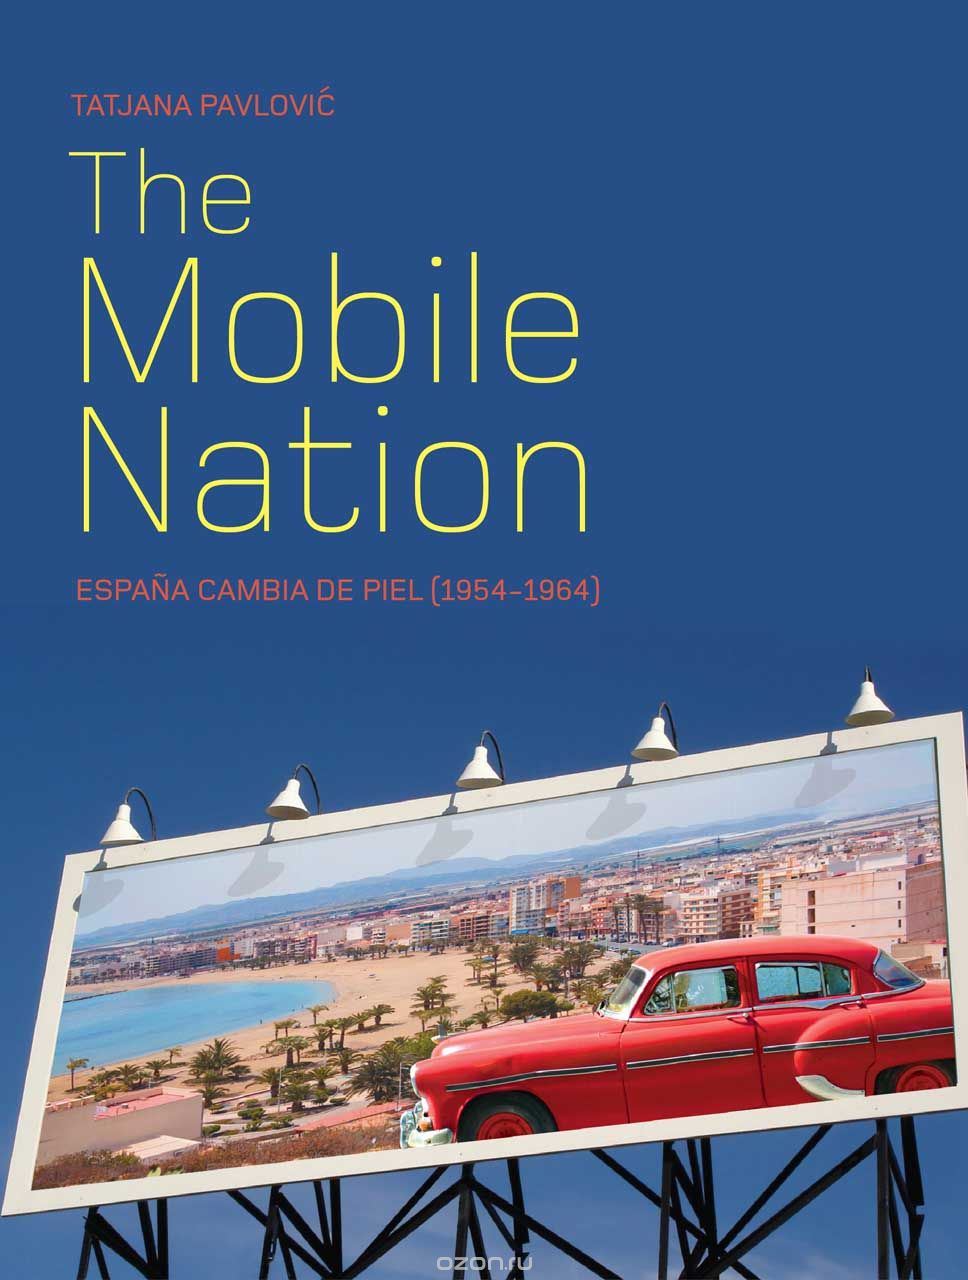 Скачать книгу "The Mobile Nation – Espana Cambia de piel (1954– 1964)"